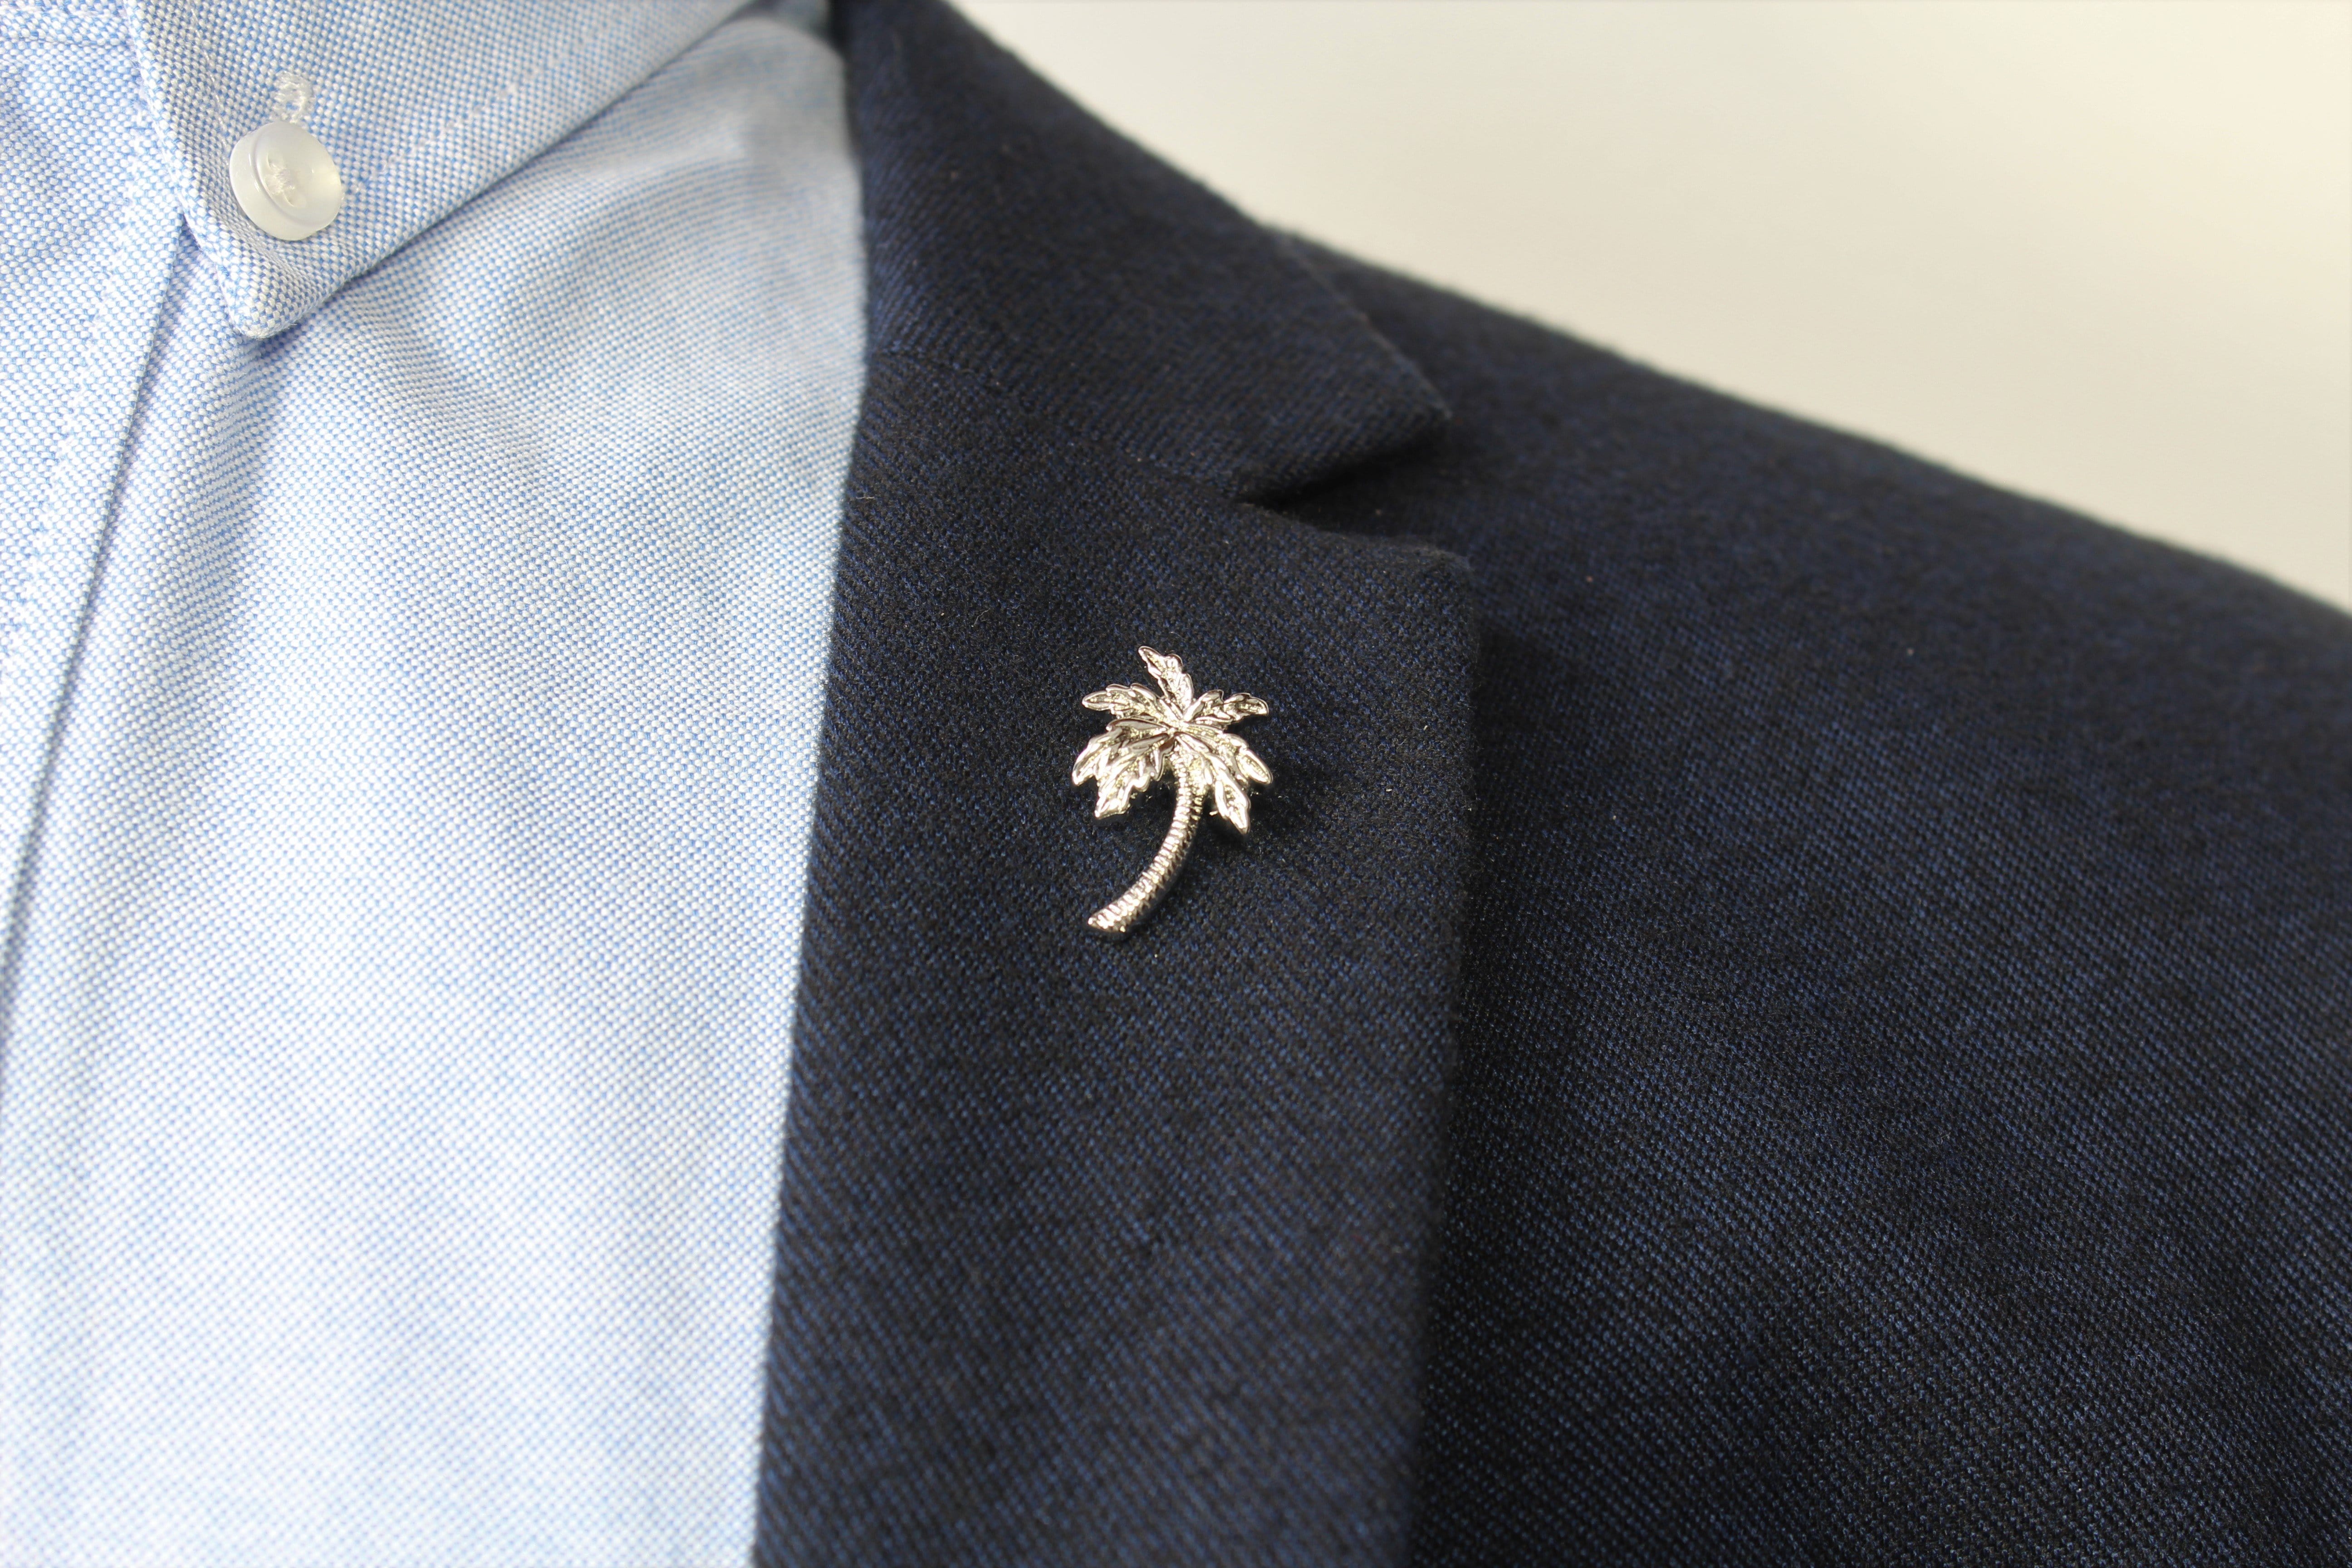 Palm Tree Lapel Pin on blazer - Stolen Riches